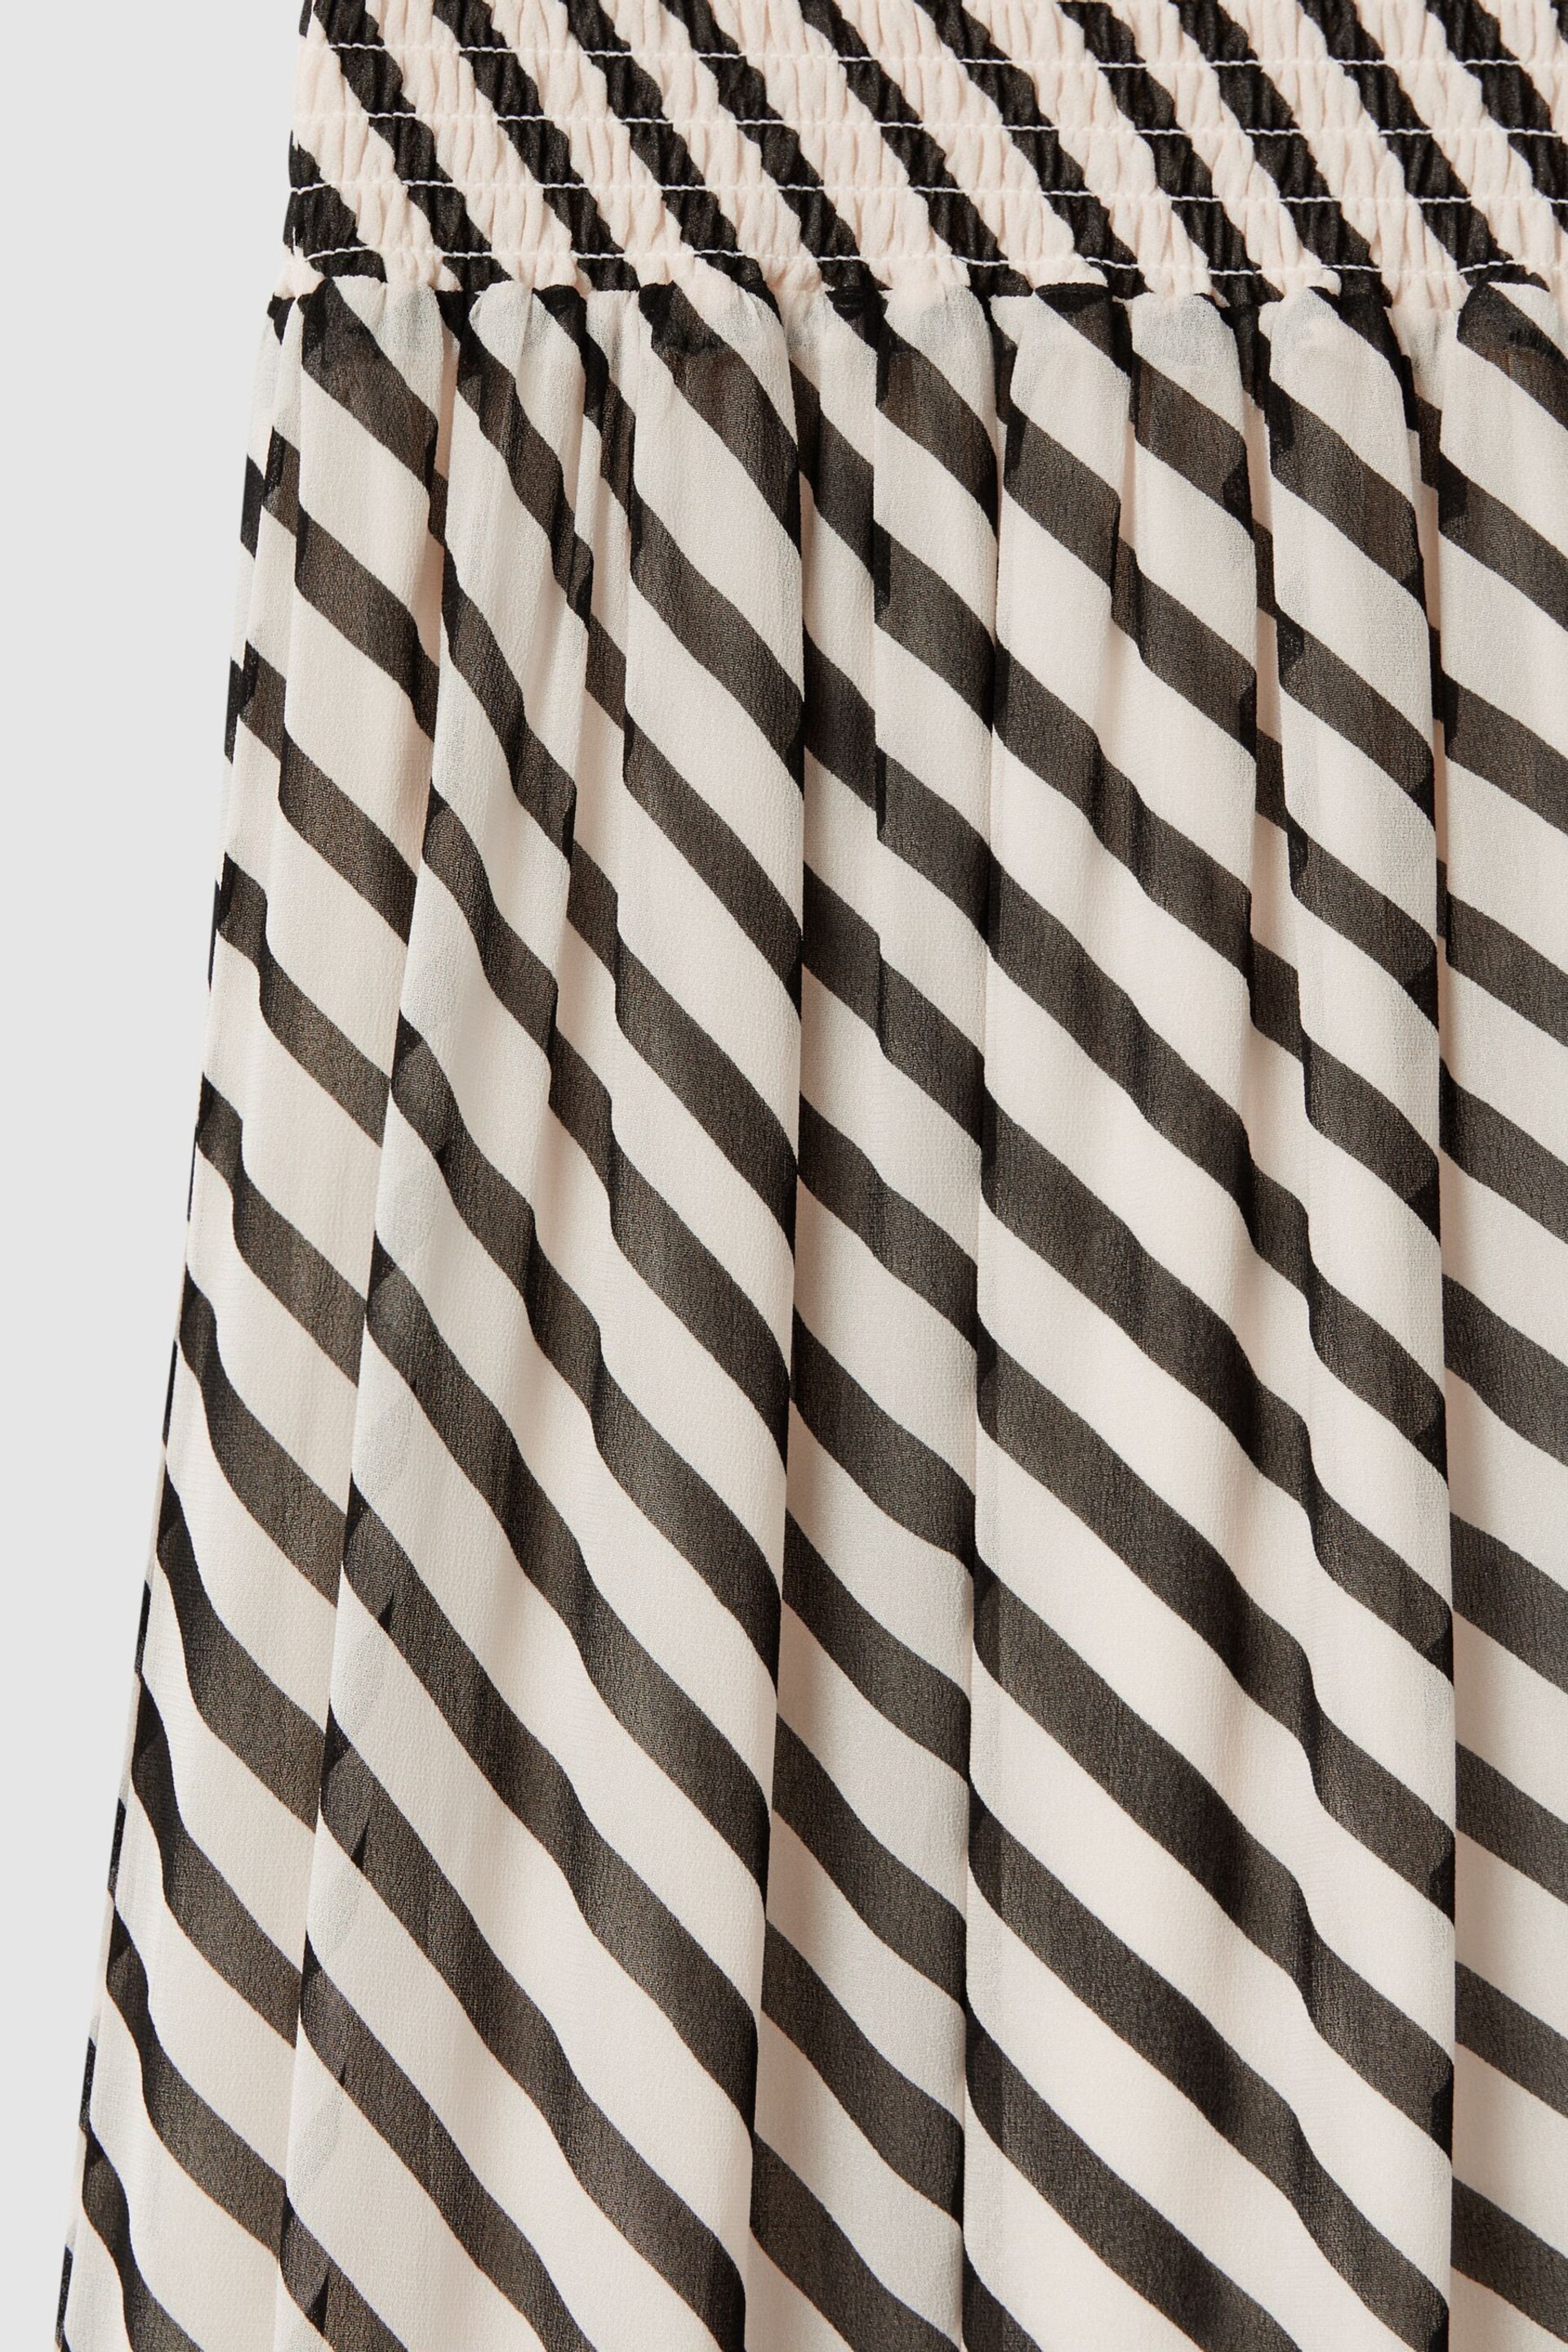 Reiss Black/Cream Dani Striped Panelled Midi Skirt - Image 4 of 4